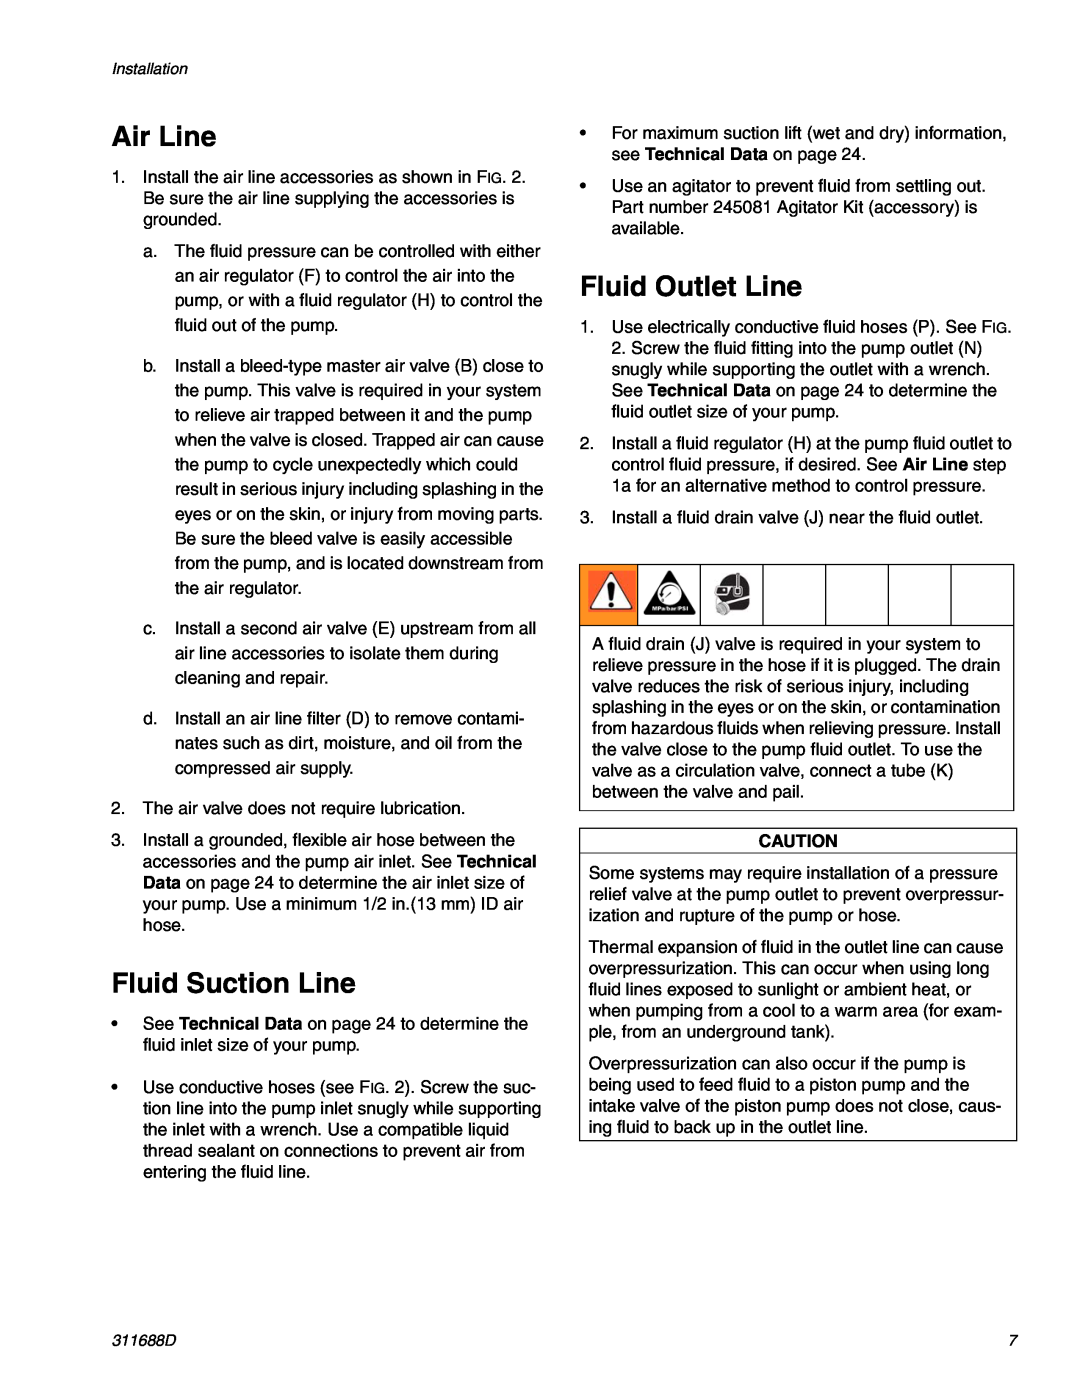 Graco 3D150 important safety instructions Air Line, Fluid Suction Line, Fluid Outlet Line 